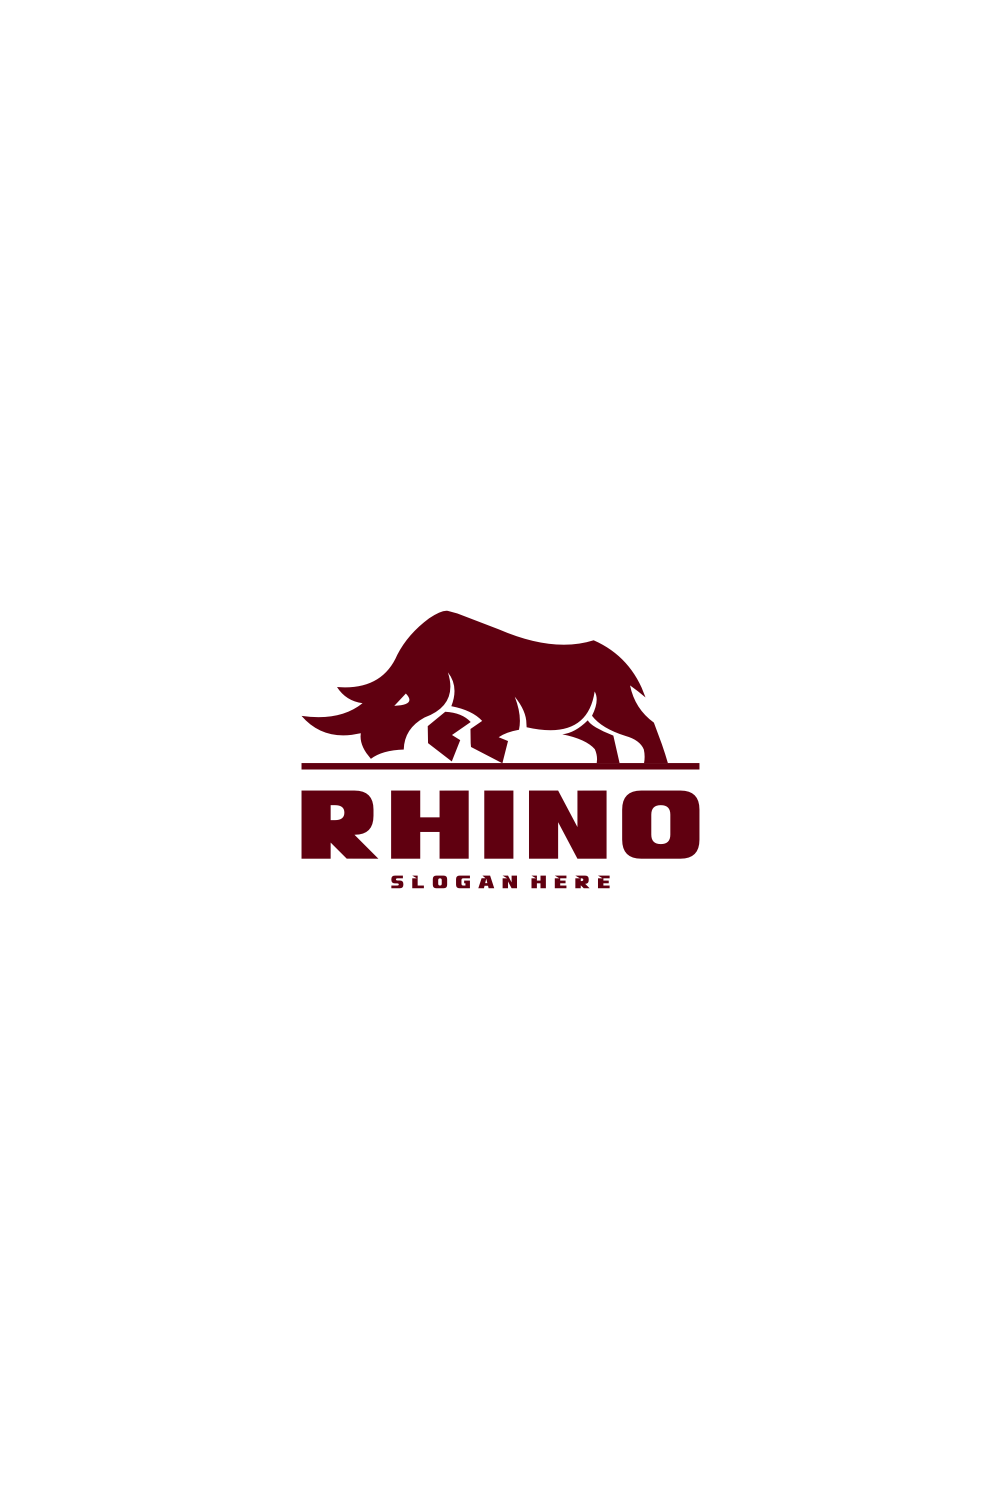 Rhino Animal Logo Vector Design Pinterest image.